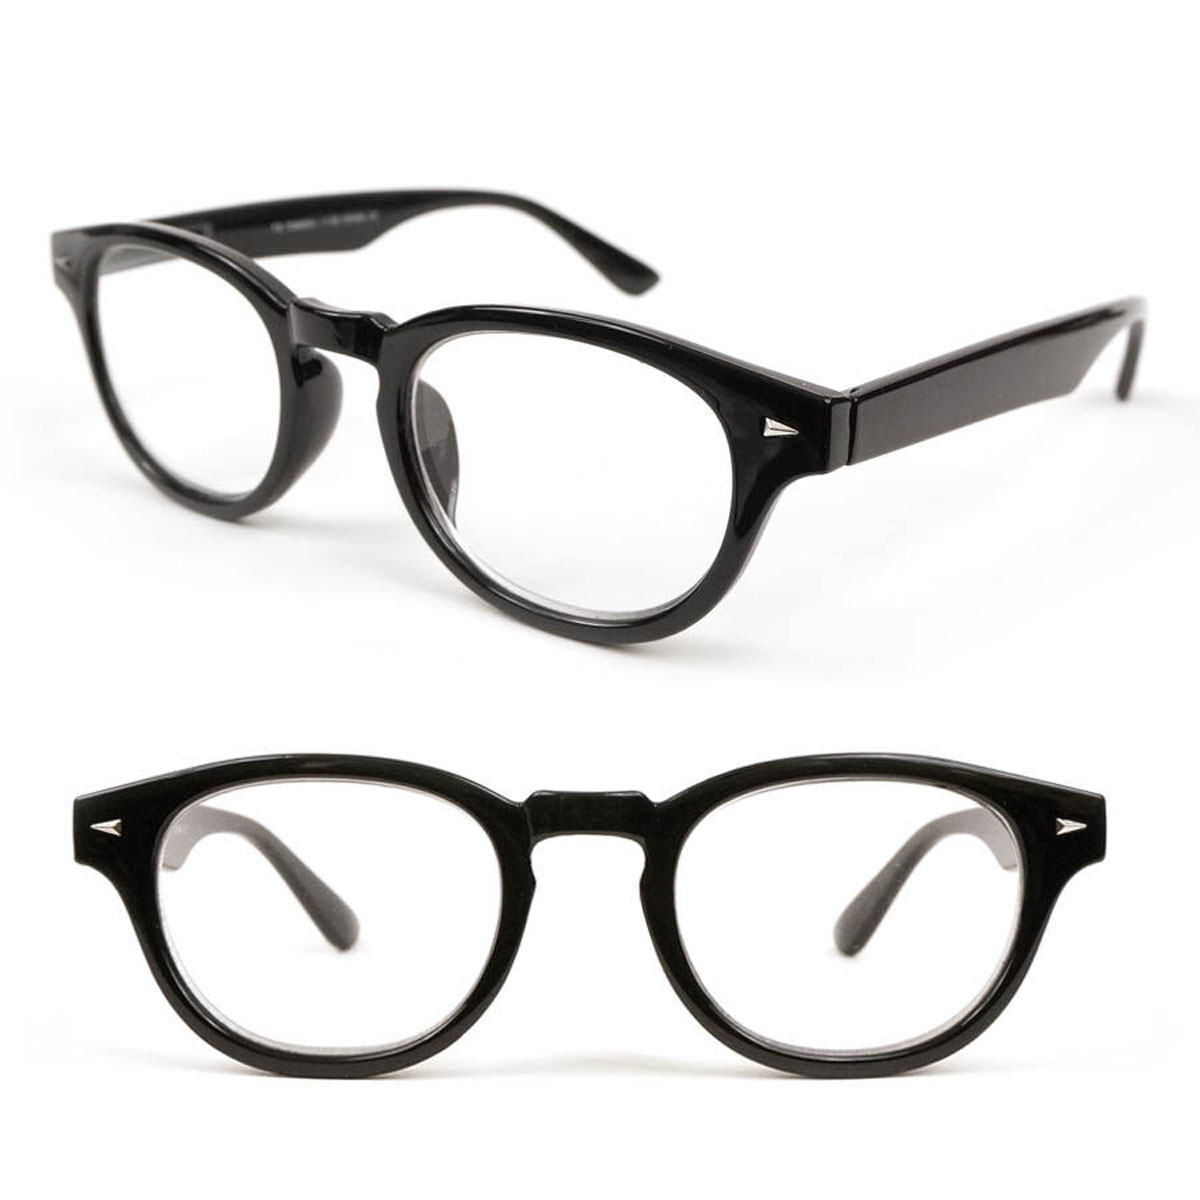 Medium Round Classic Frame Reading Glasses Geek Retro Vintage Style 100-375 - Black, +2.25